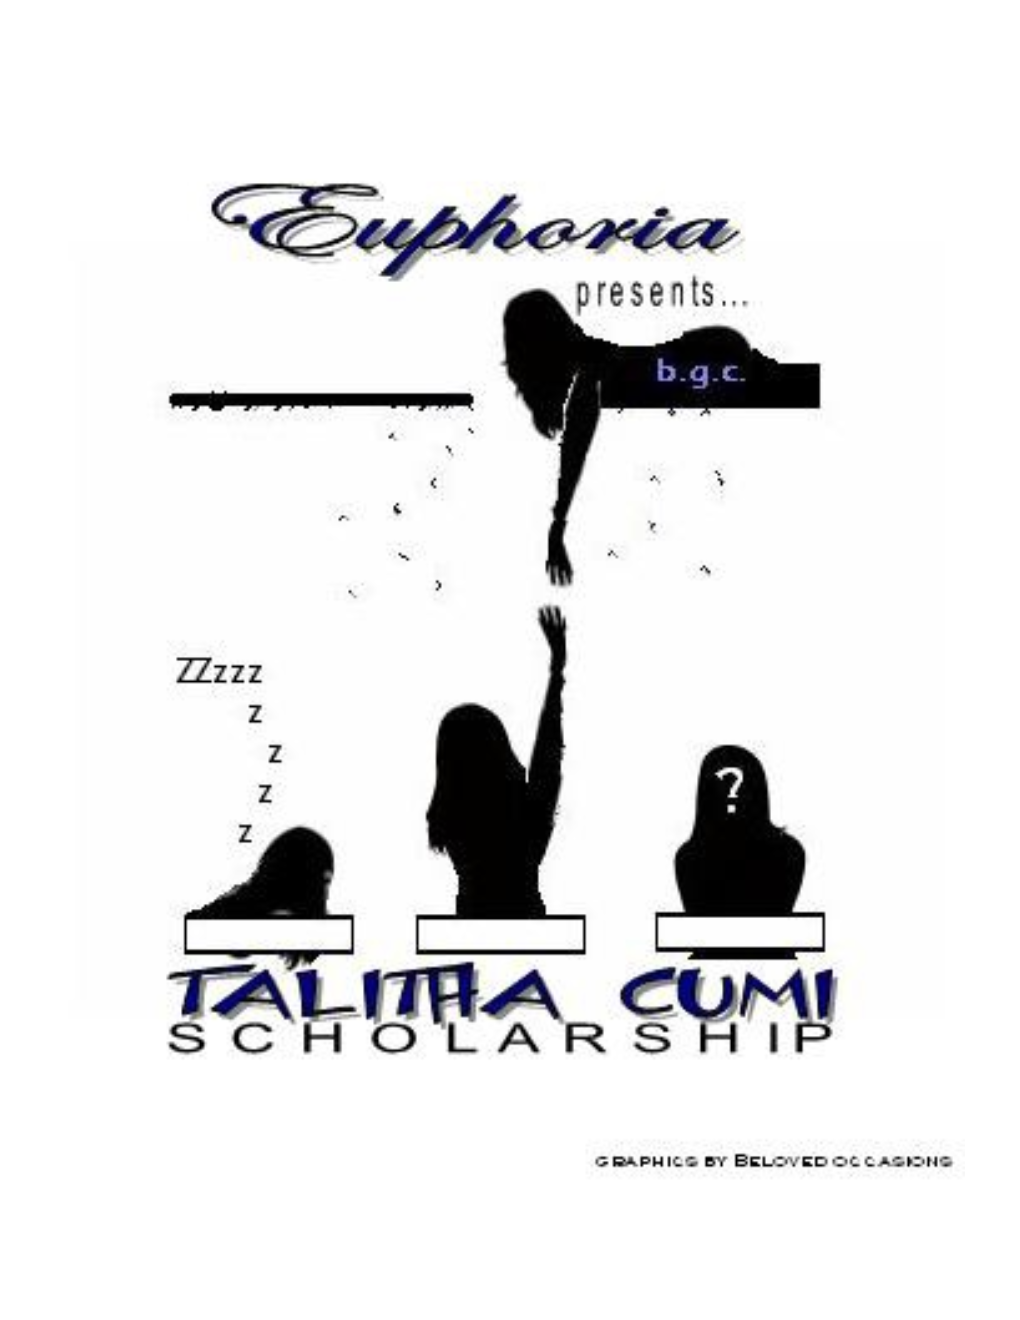 Talitha Cumi Scholarship